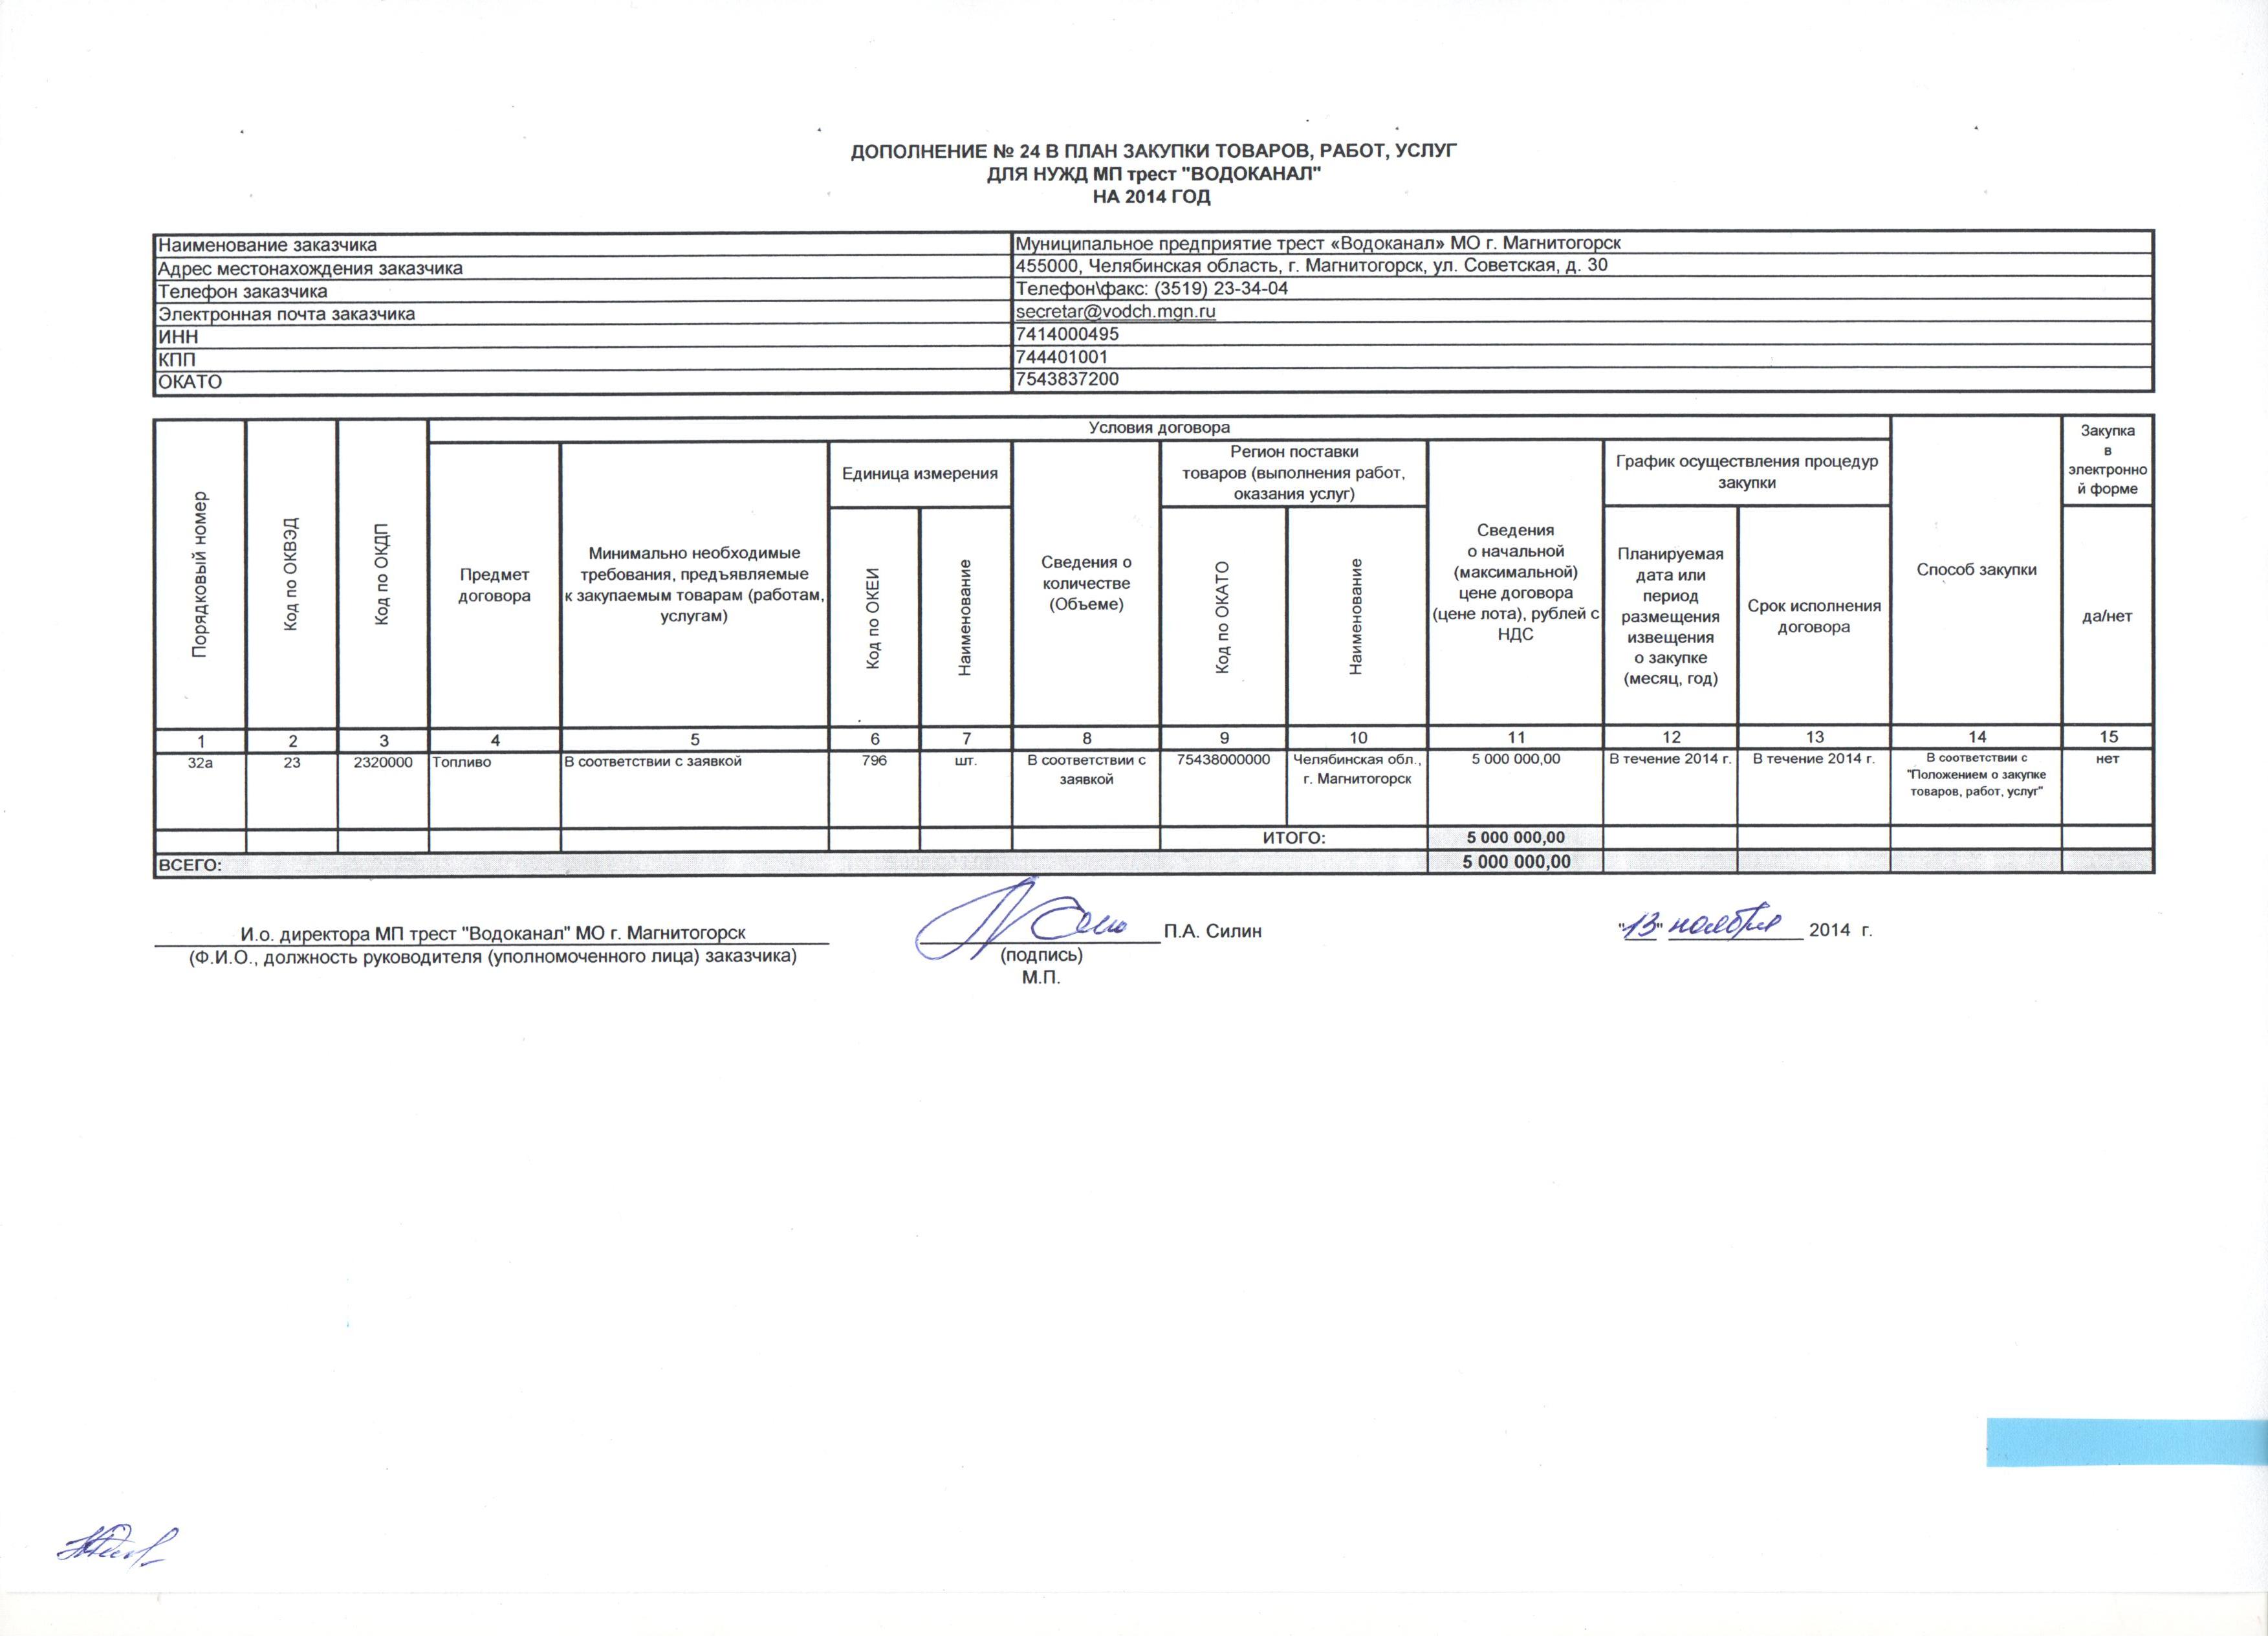 Дополнения к плану на 2014 г. 24.jpg